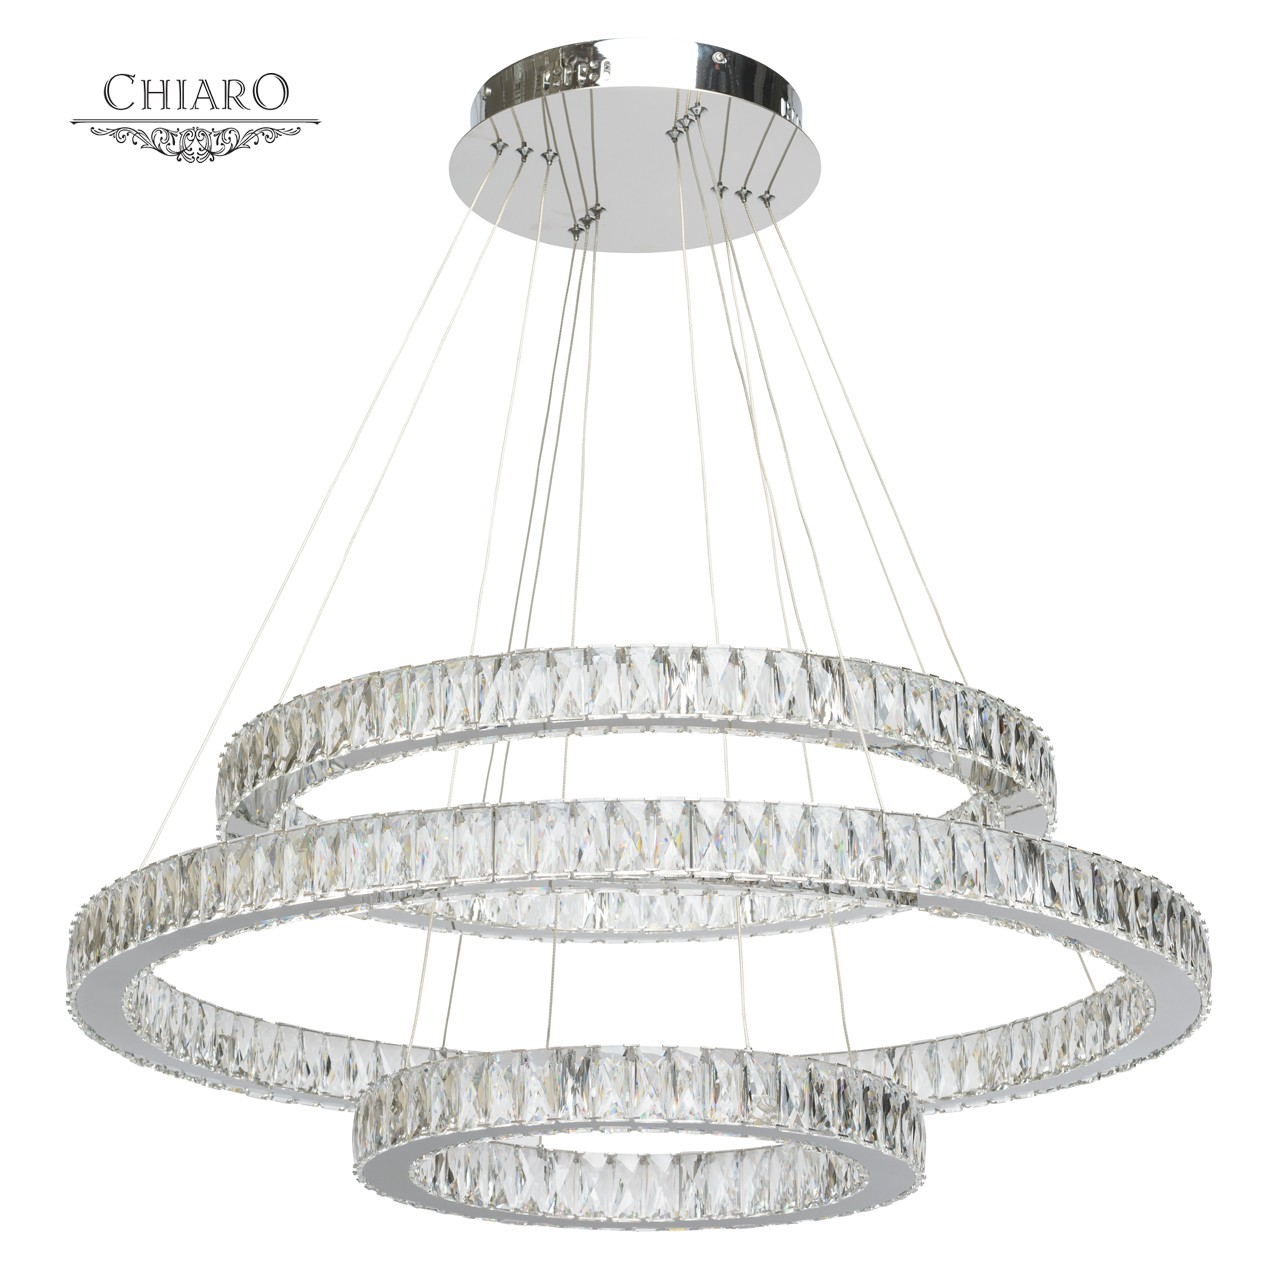 Гослар 184*0.5W LED от производителя Chiaro, арт: 498012003